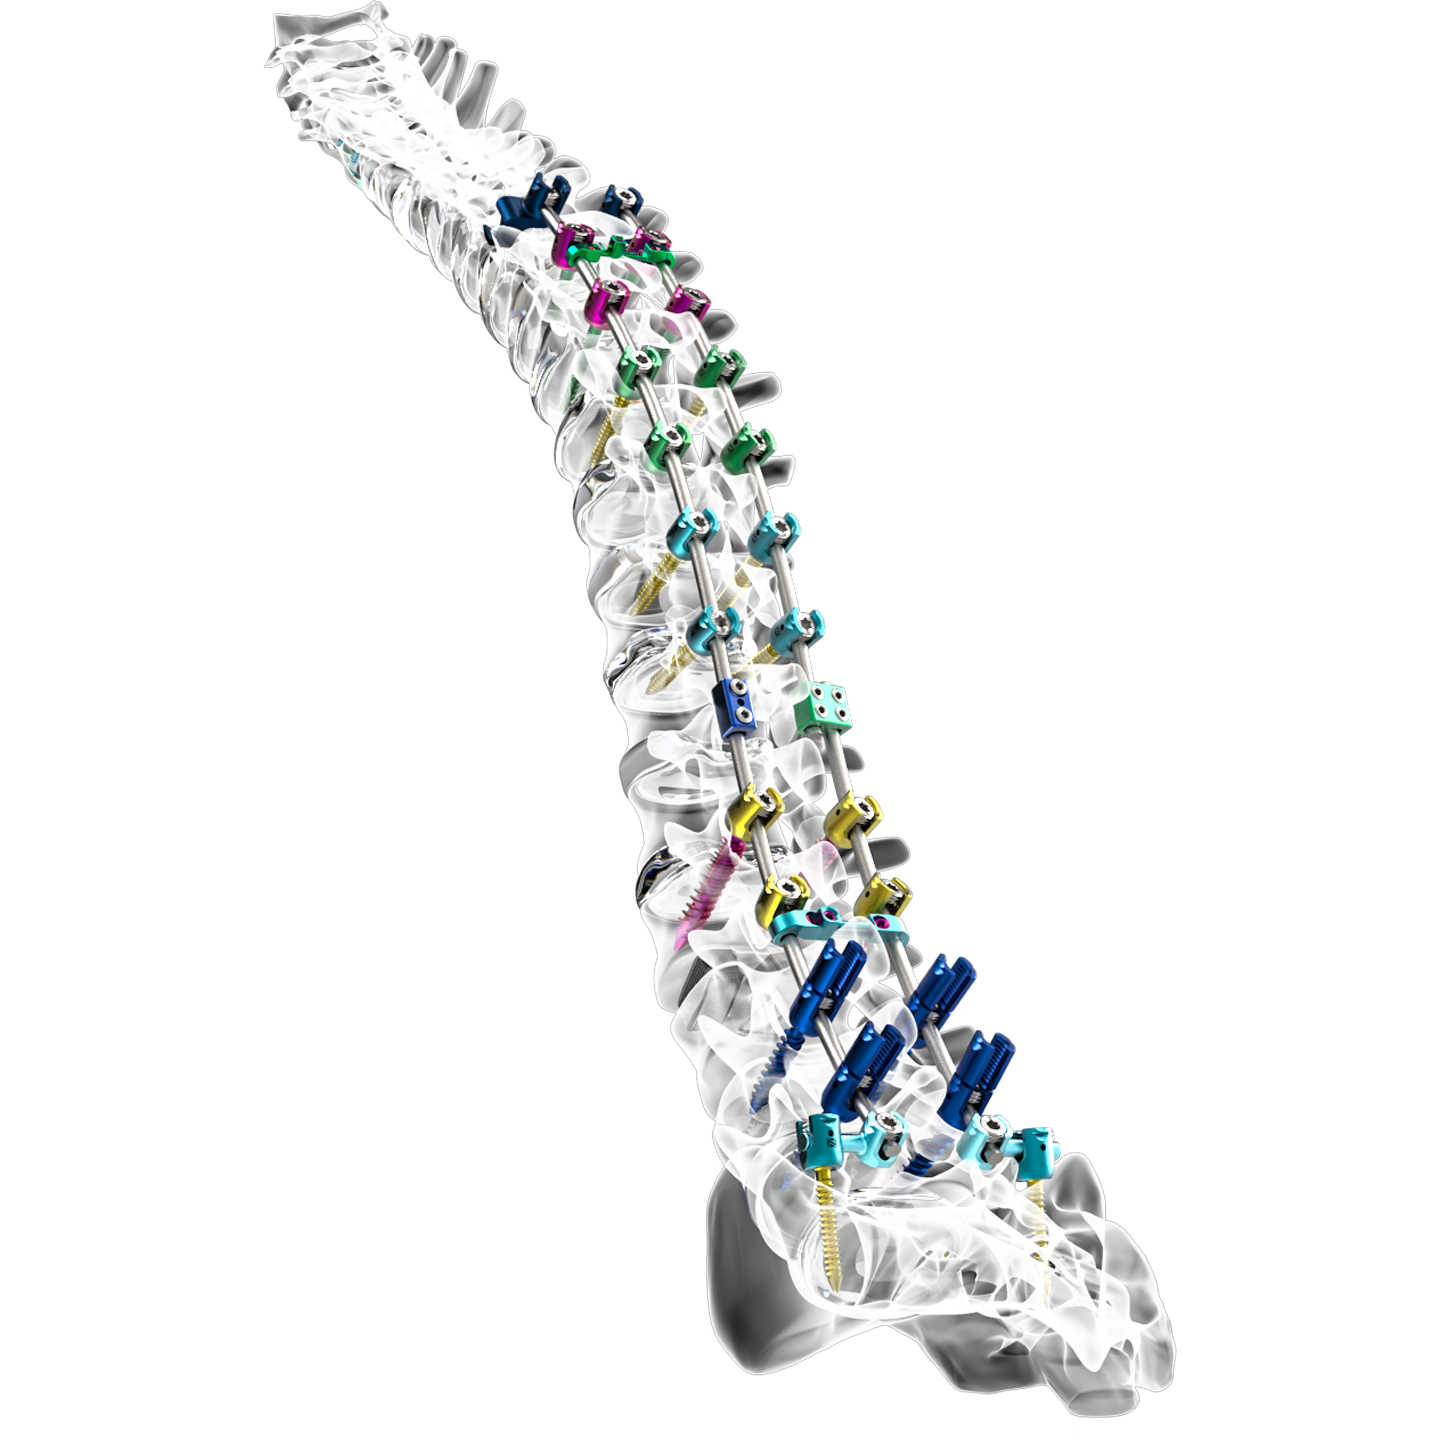 Inertia, a deformity correction system by Nexxt Spine. Image via Nexxt Spine.